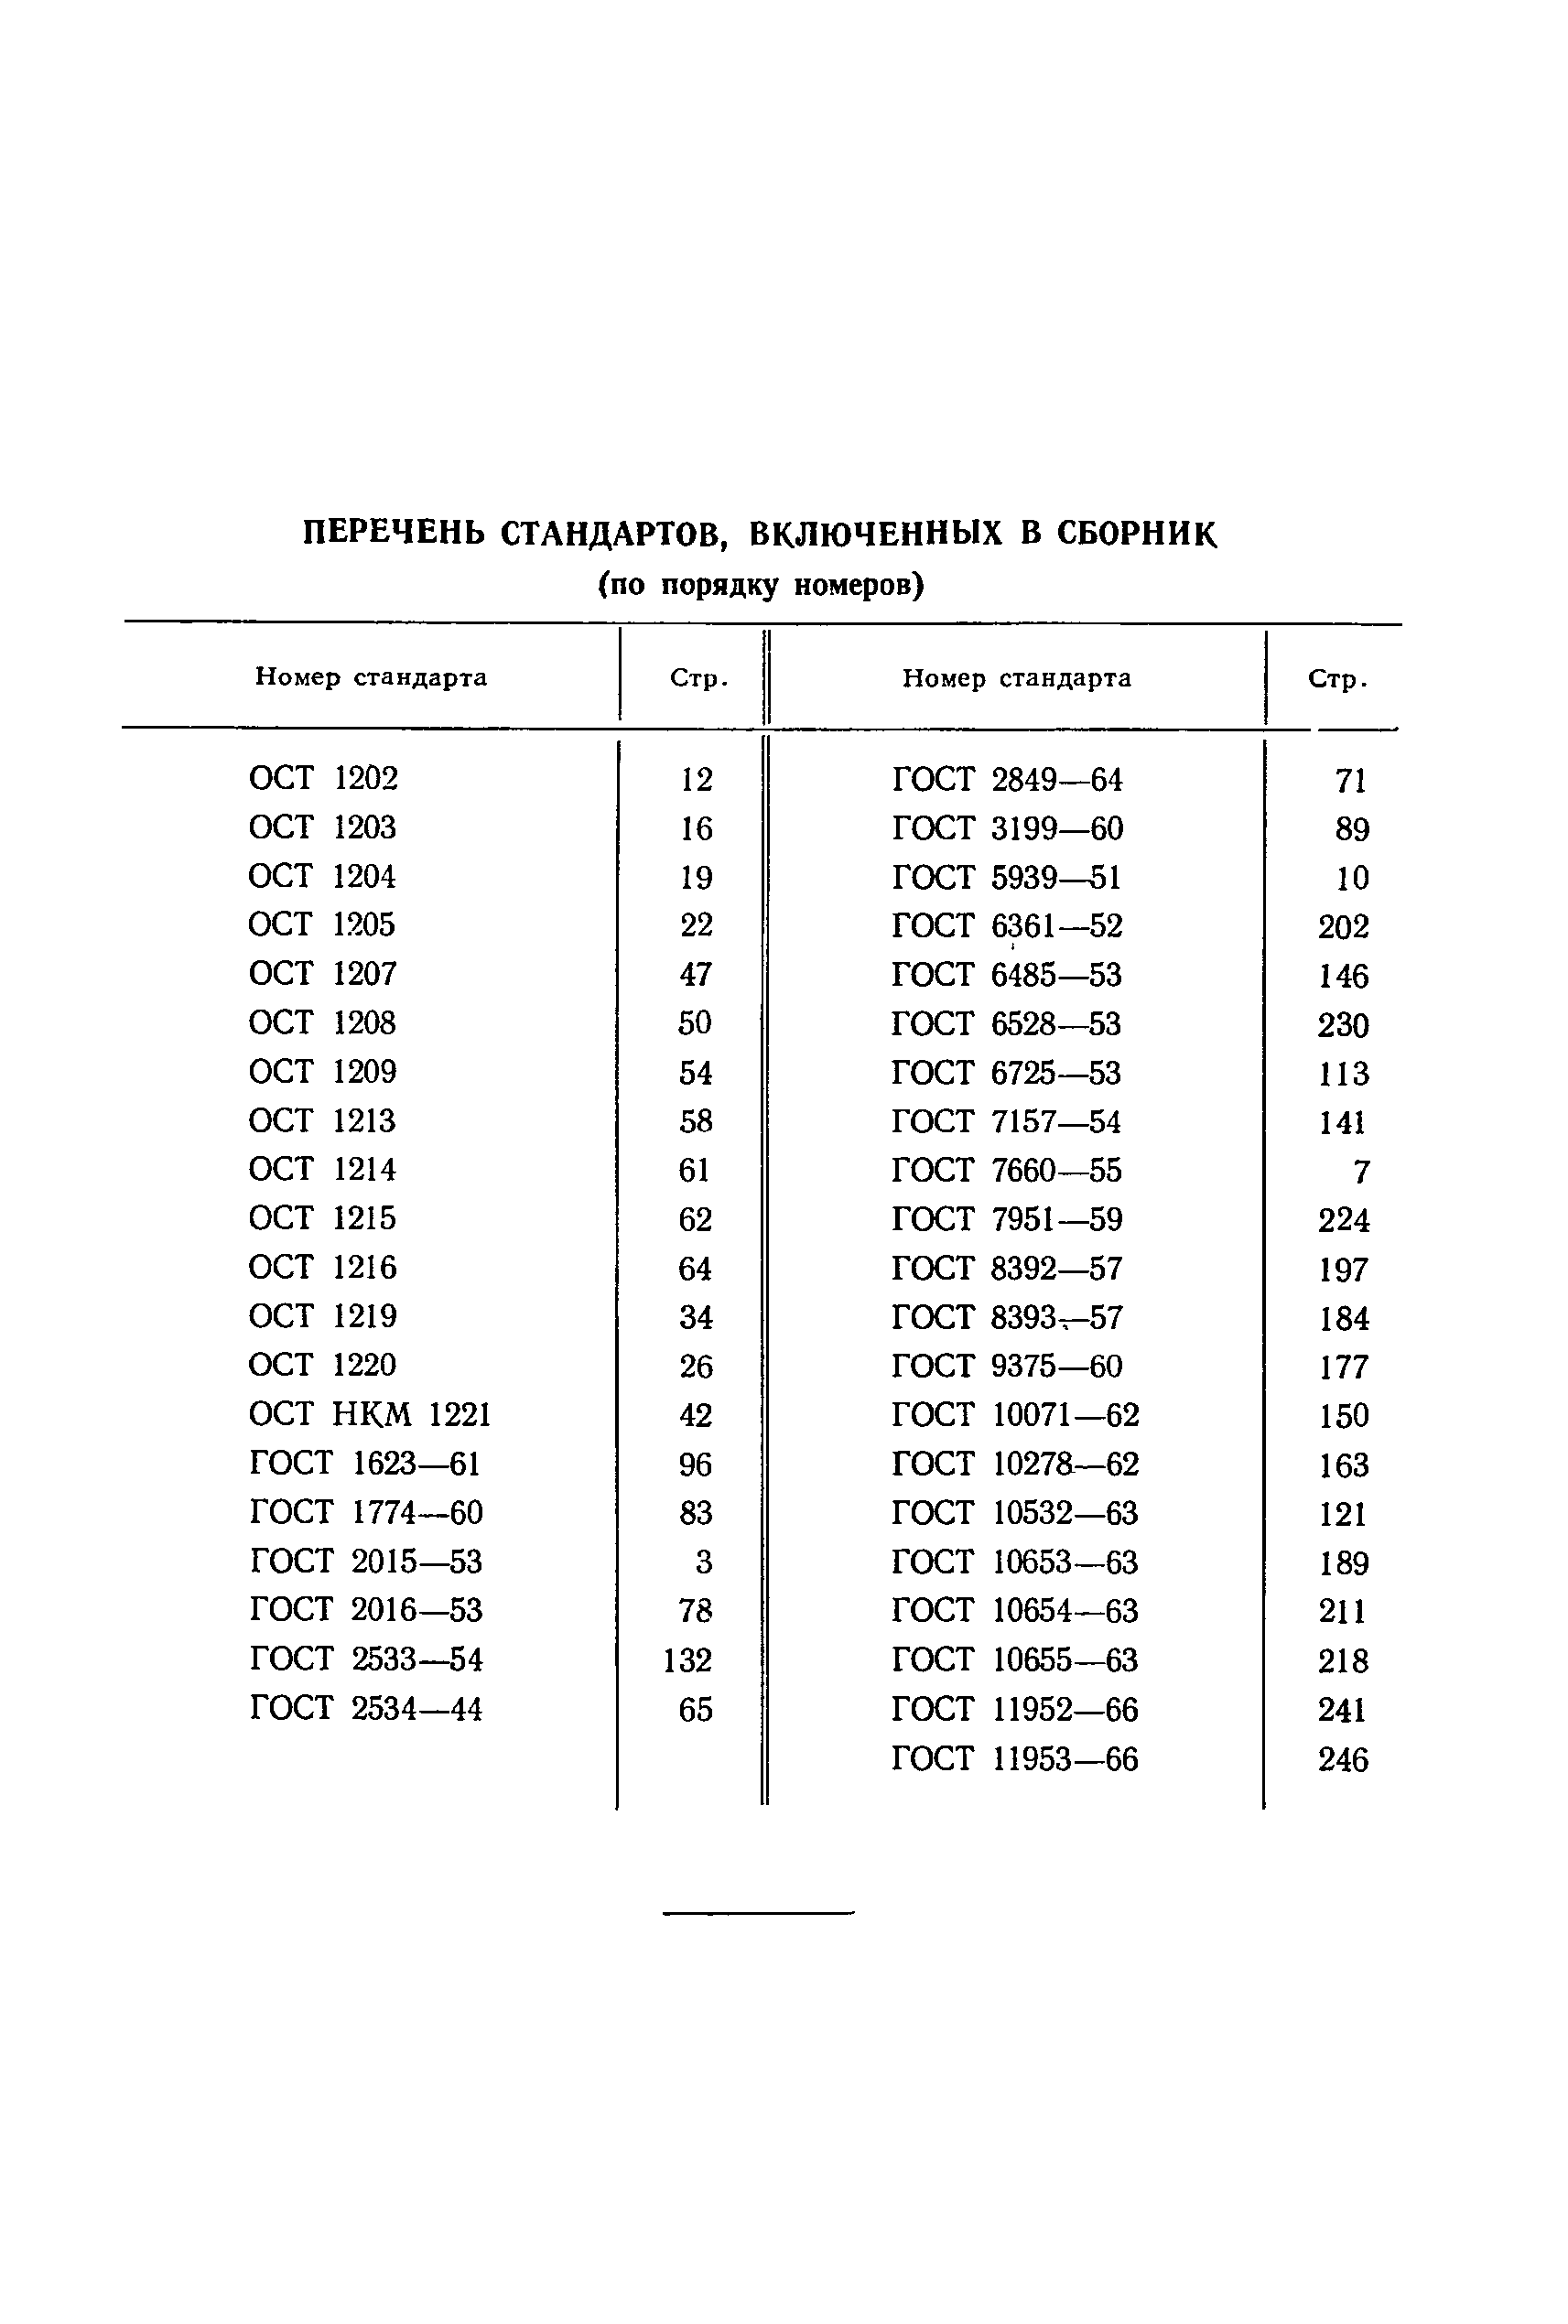 ГОСТ 11952-66